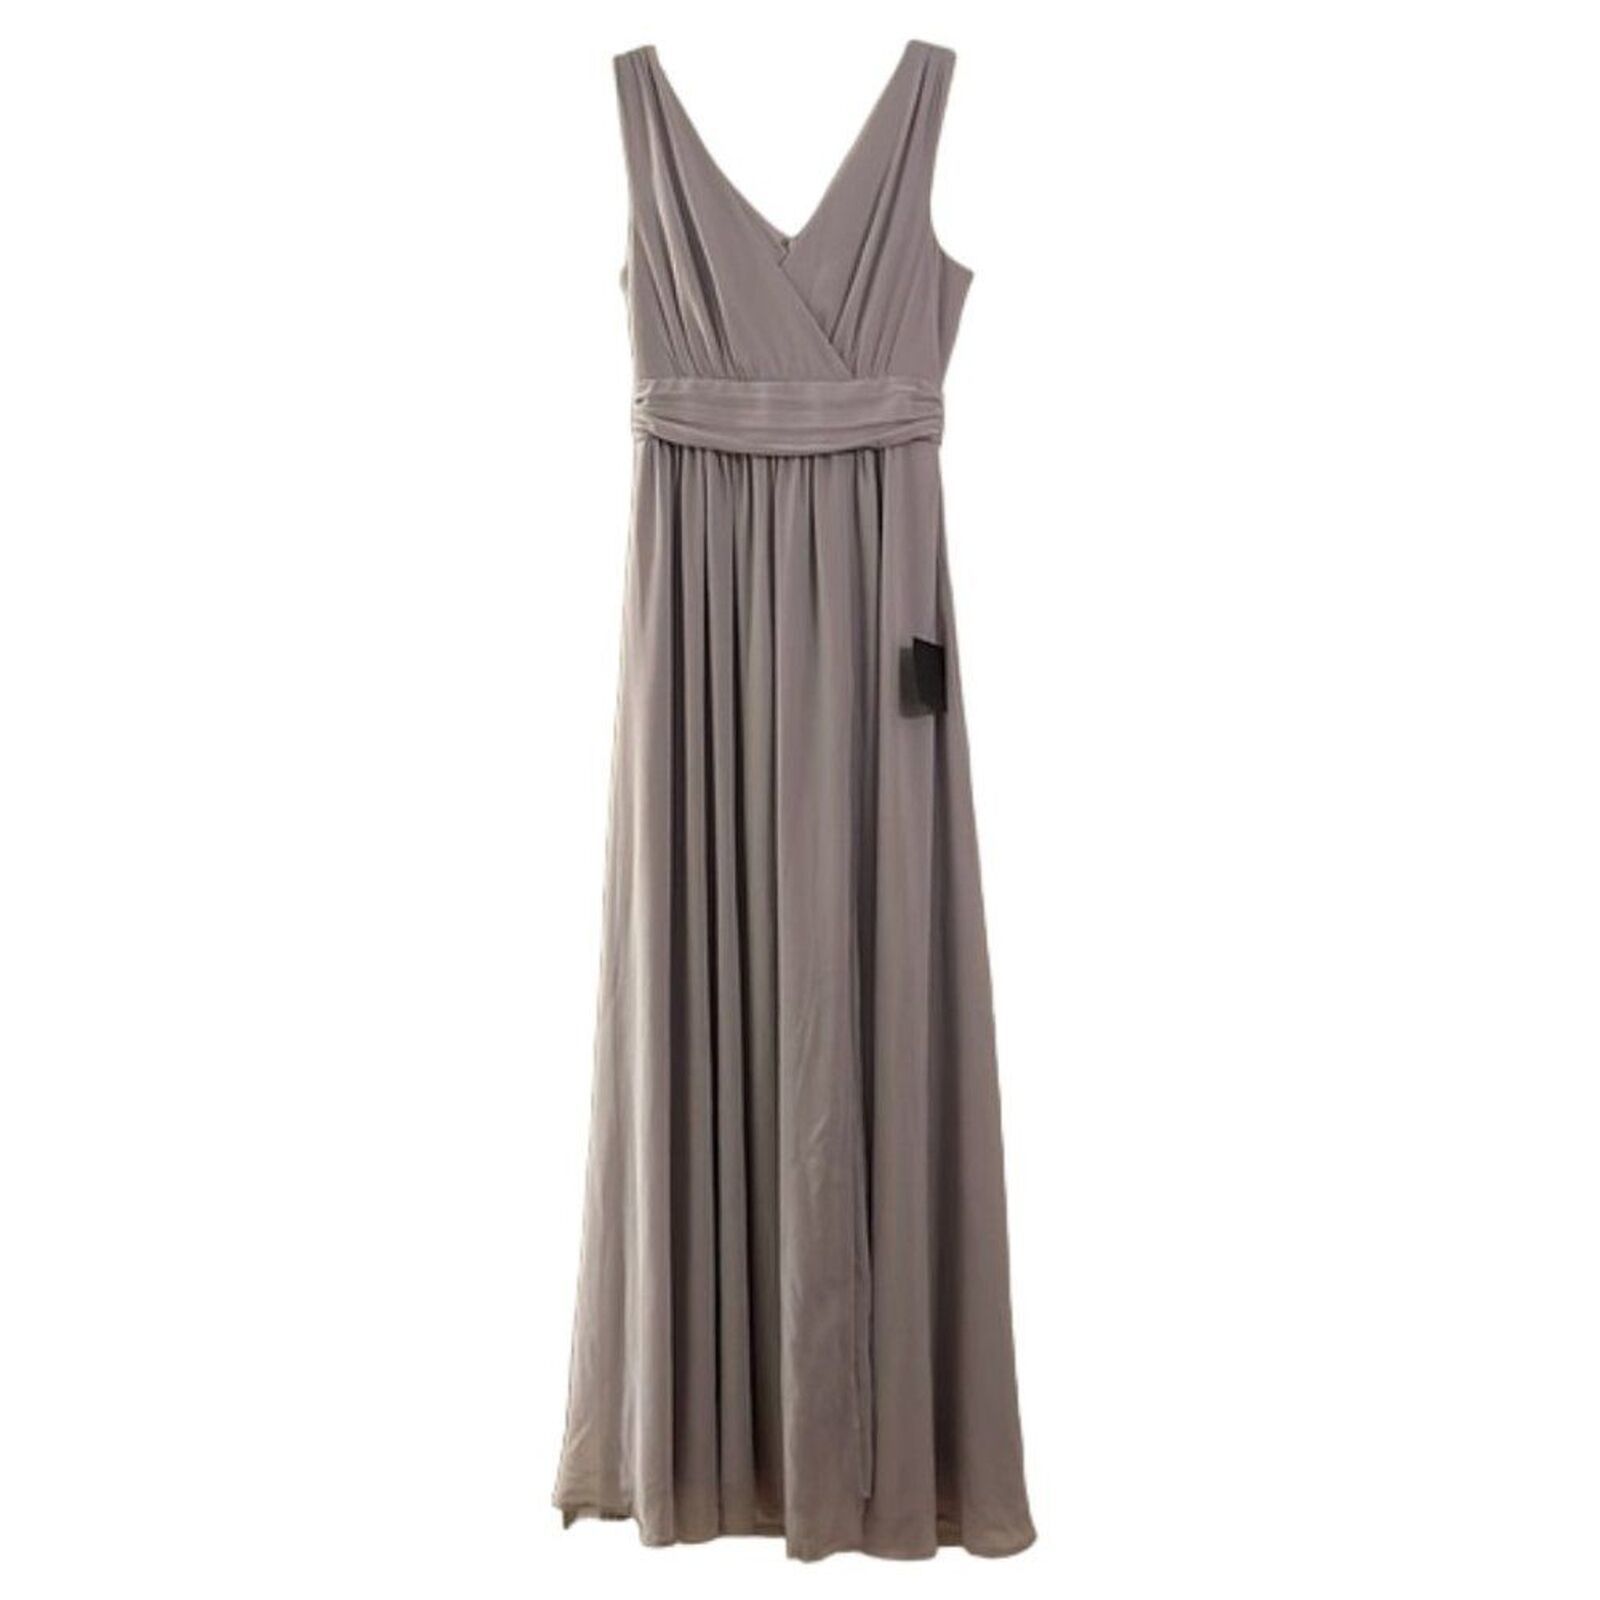 Primary image for Lulu's Grey Formal Maxi Dress Women's Size Small NEW Chiffon Sleeveless